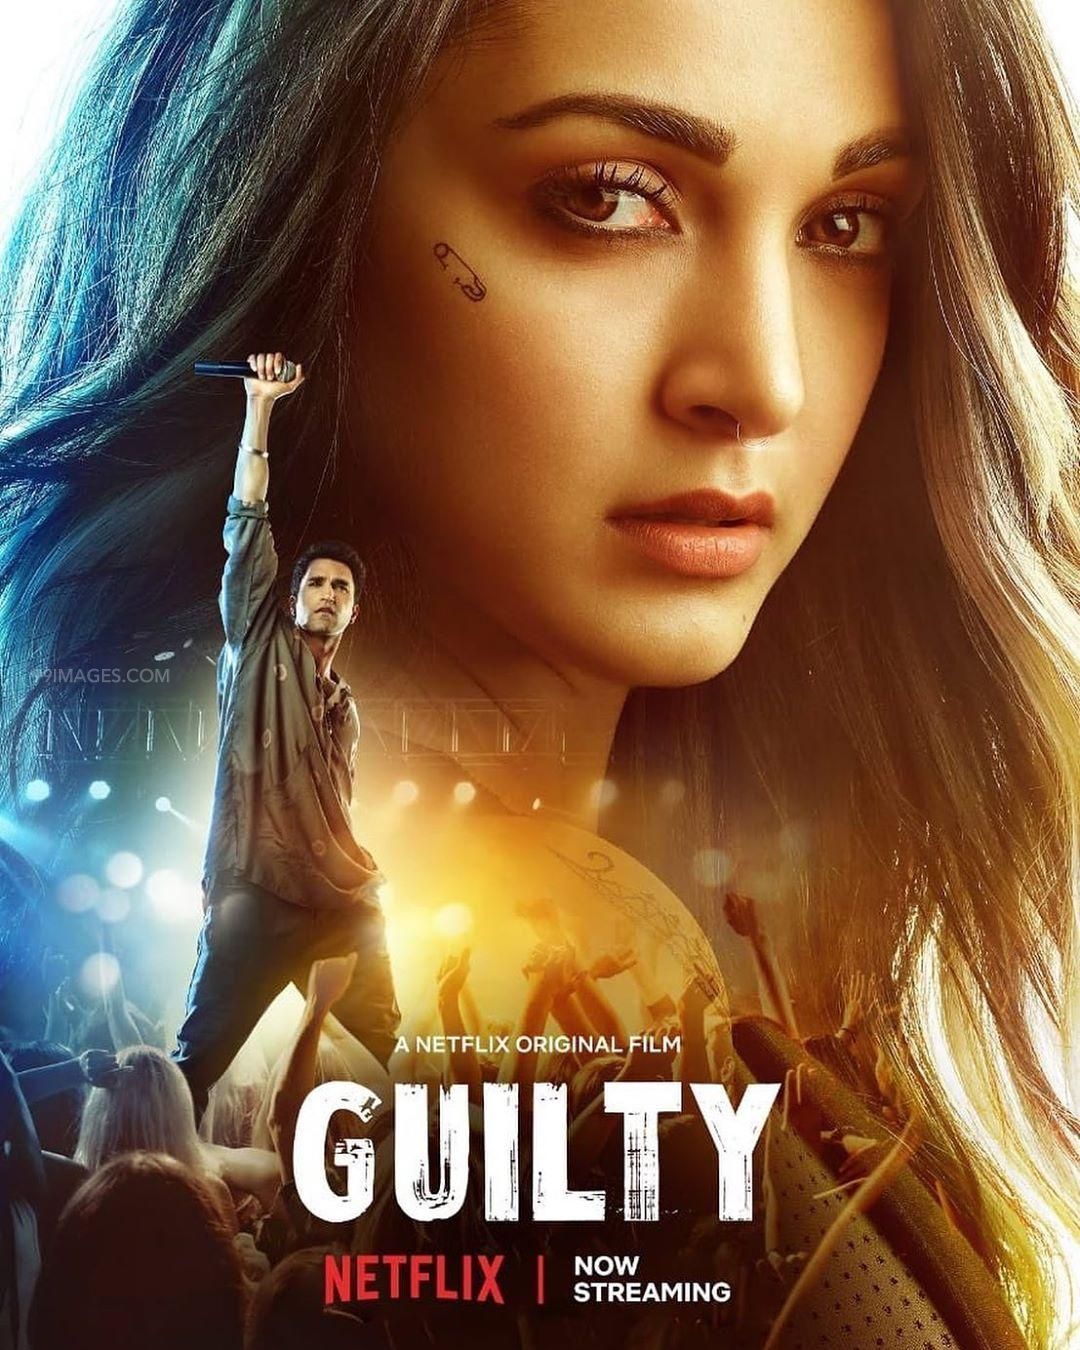 Guilty On Netflix Image, HD Photo (1080p), Wallpaper